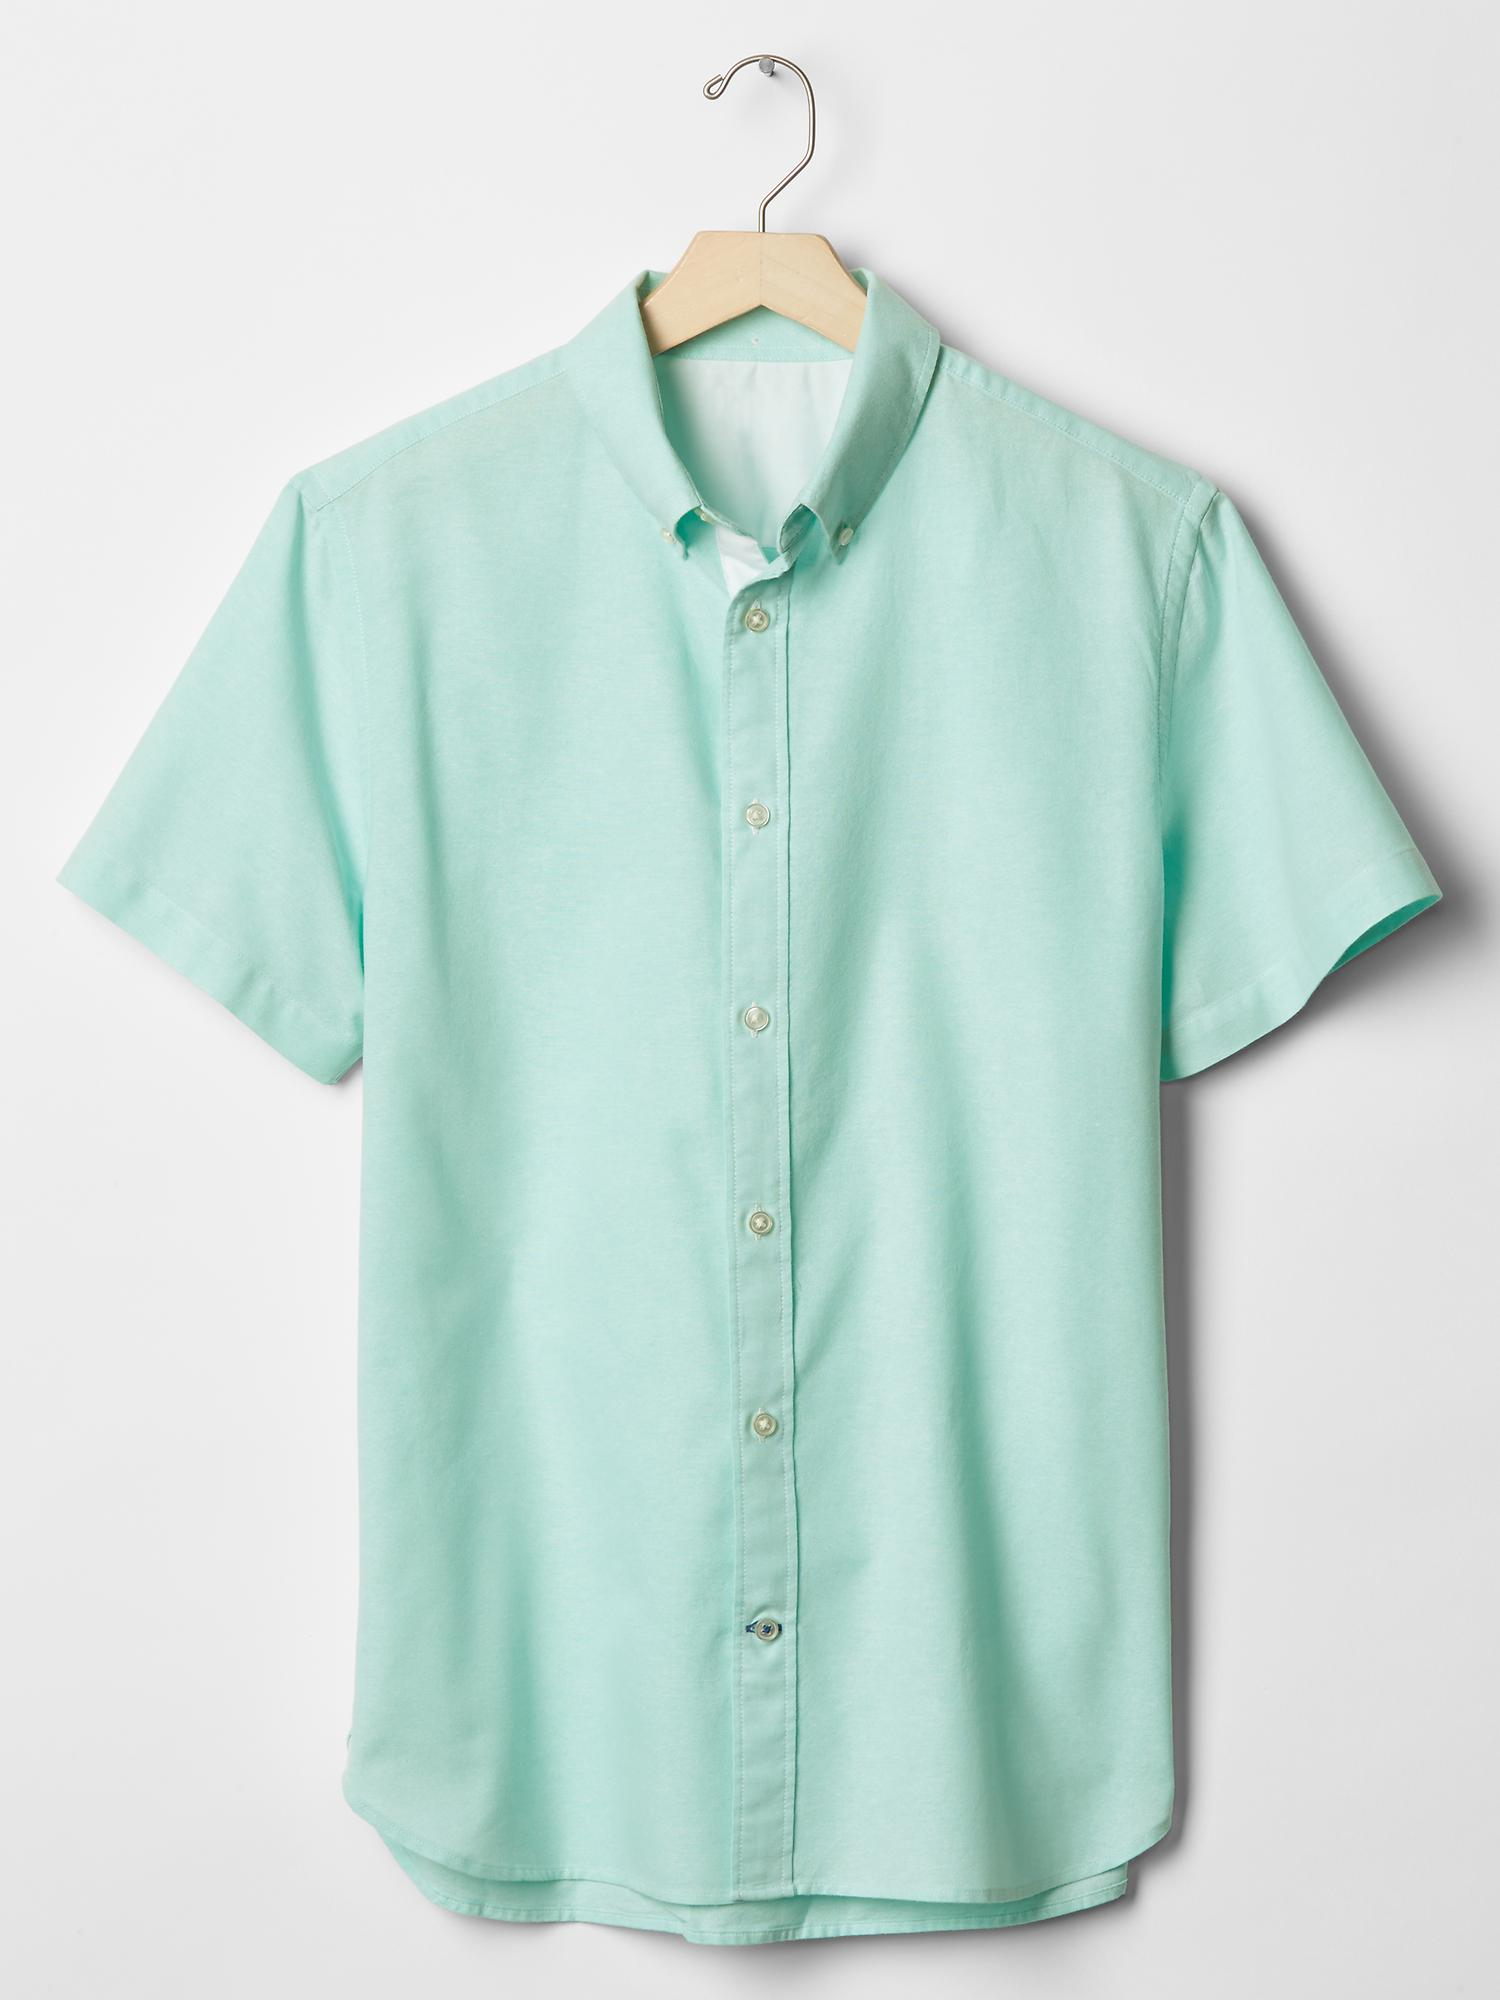 Gap | Teal Solid Oxford Shirt for Men | Lyst